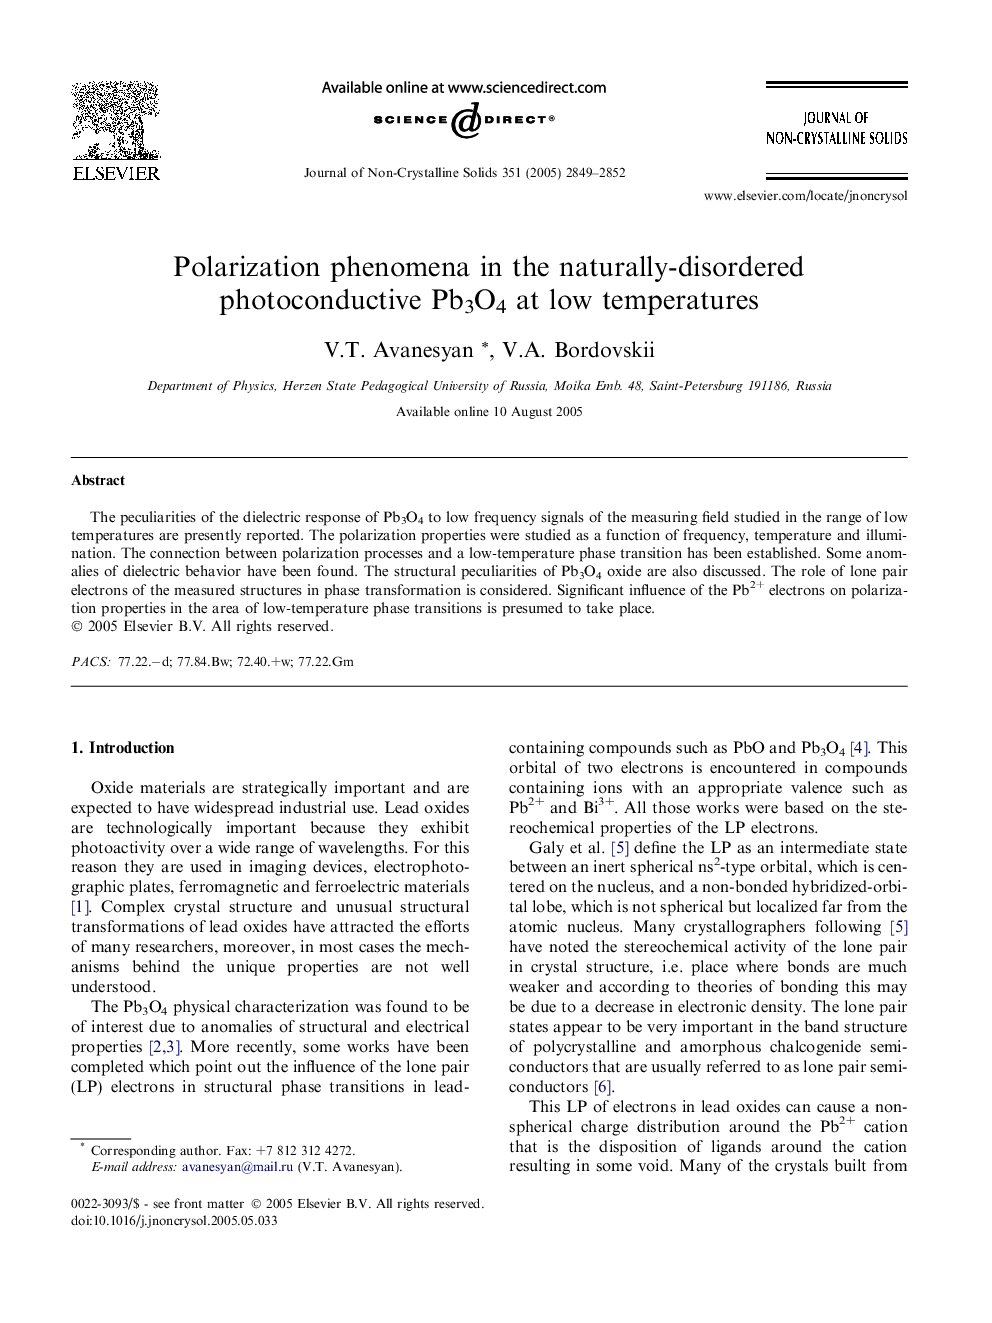 Polarization phenomena in the naturally-disordered photoconductive Pb3O4 at low temperatures